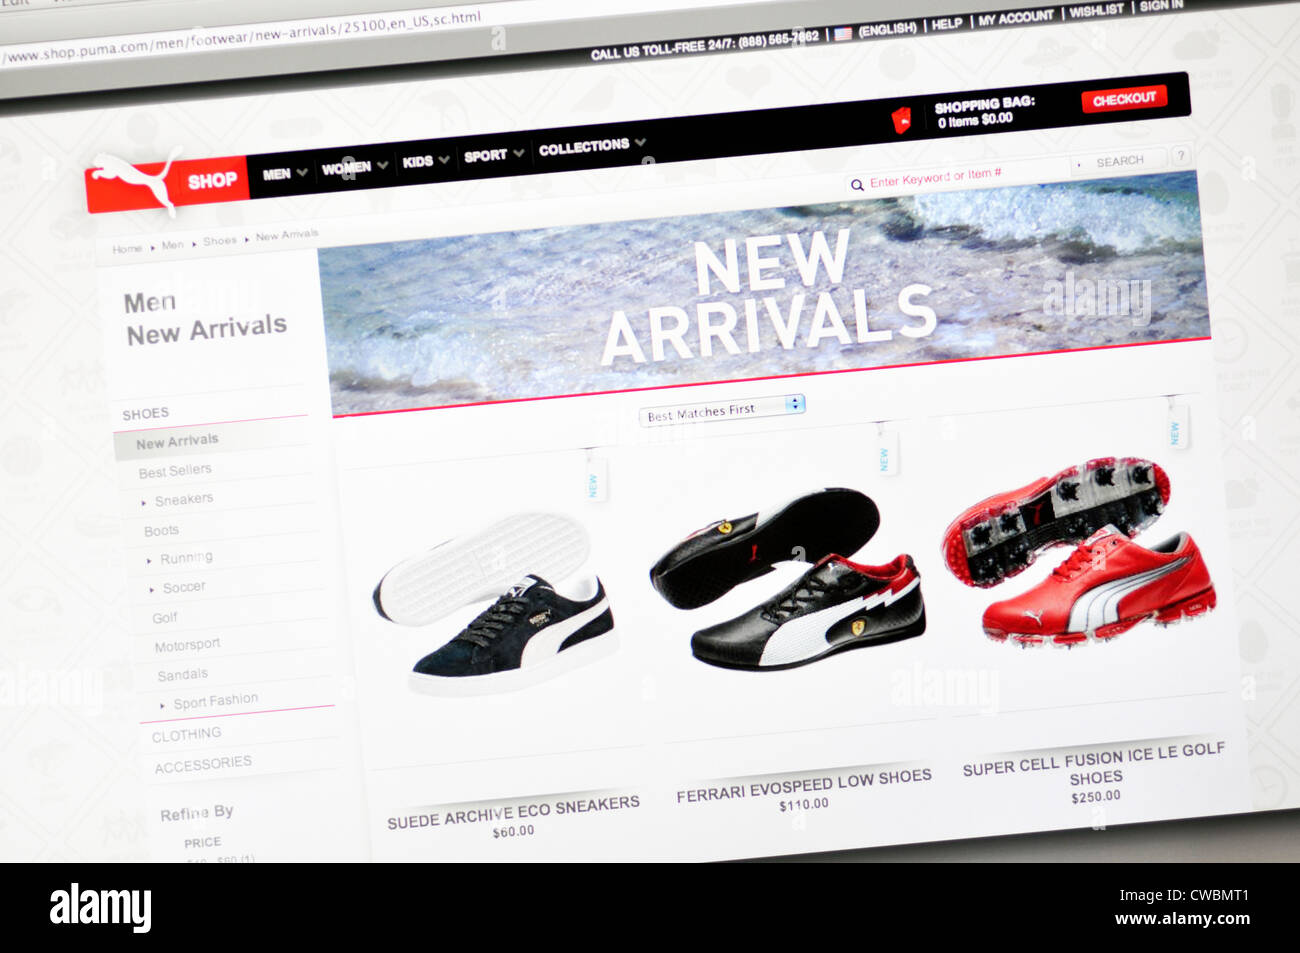 Puma website - footwear Stock Photo - Alamy